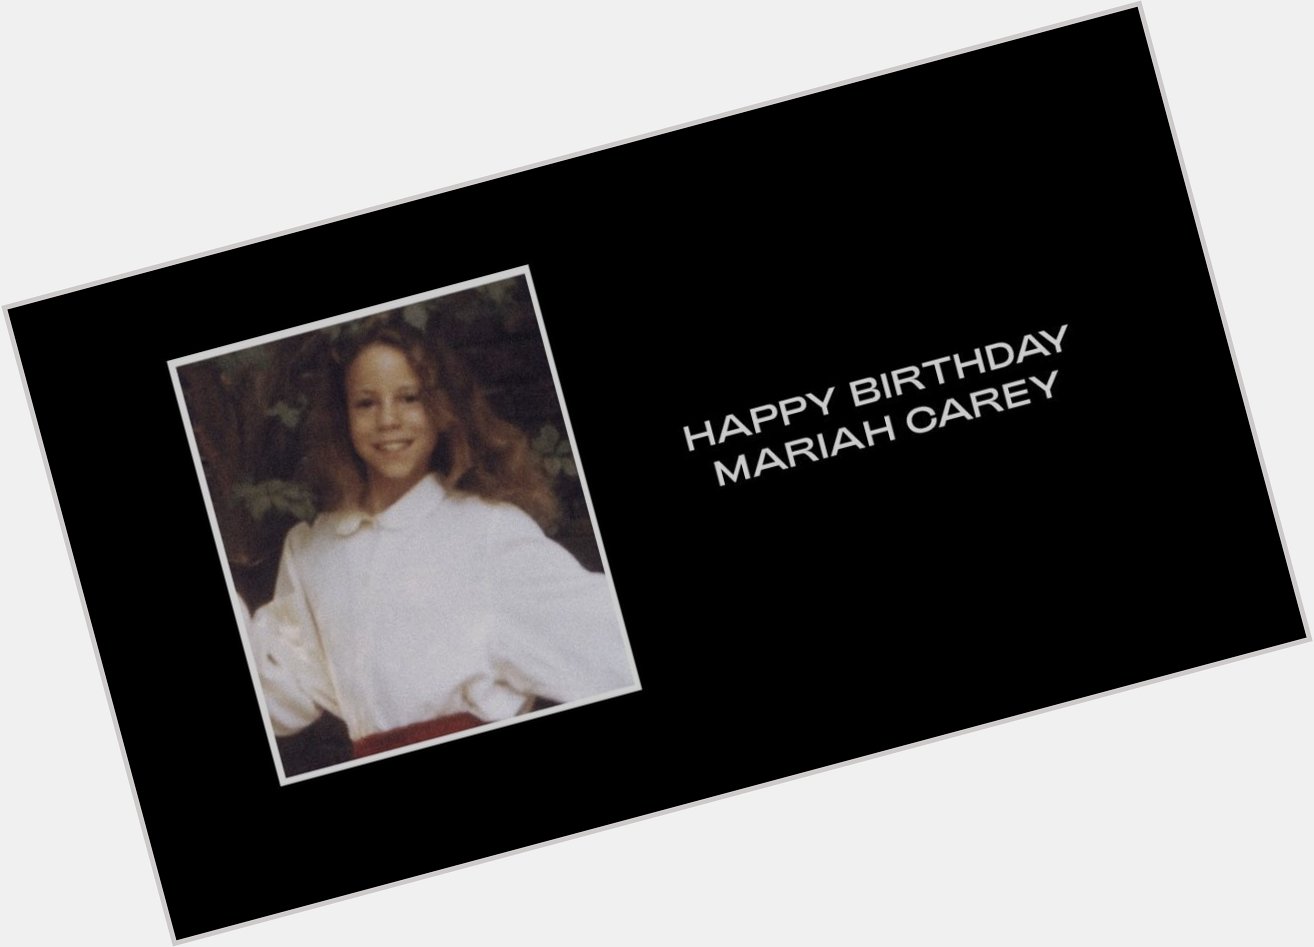 Beyoncé wishes Mariah Carey a happy birthday via her website   